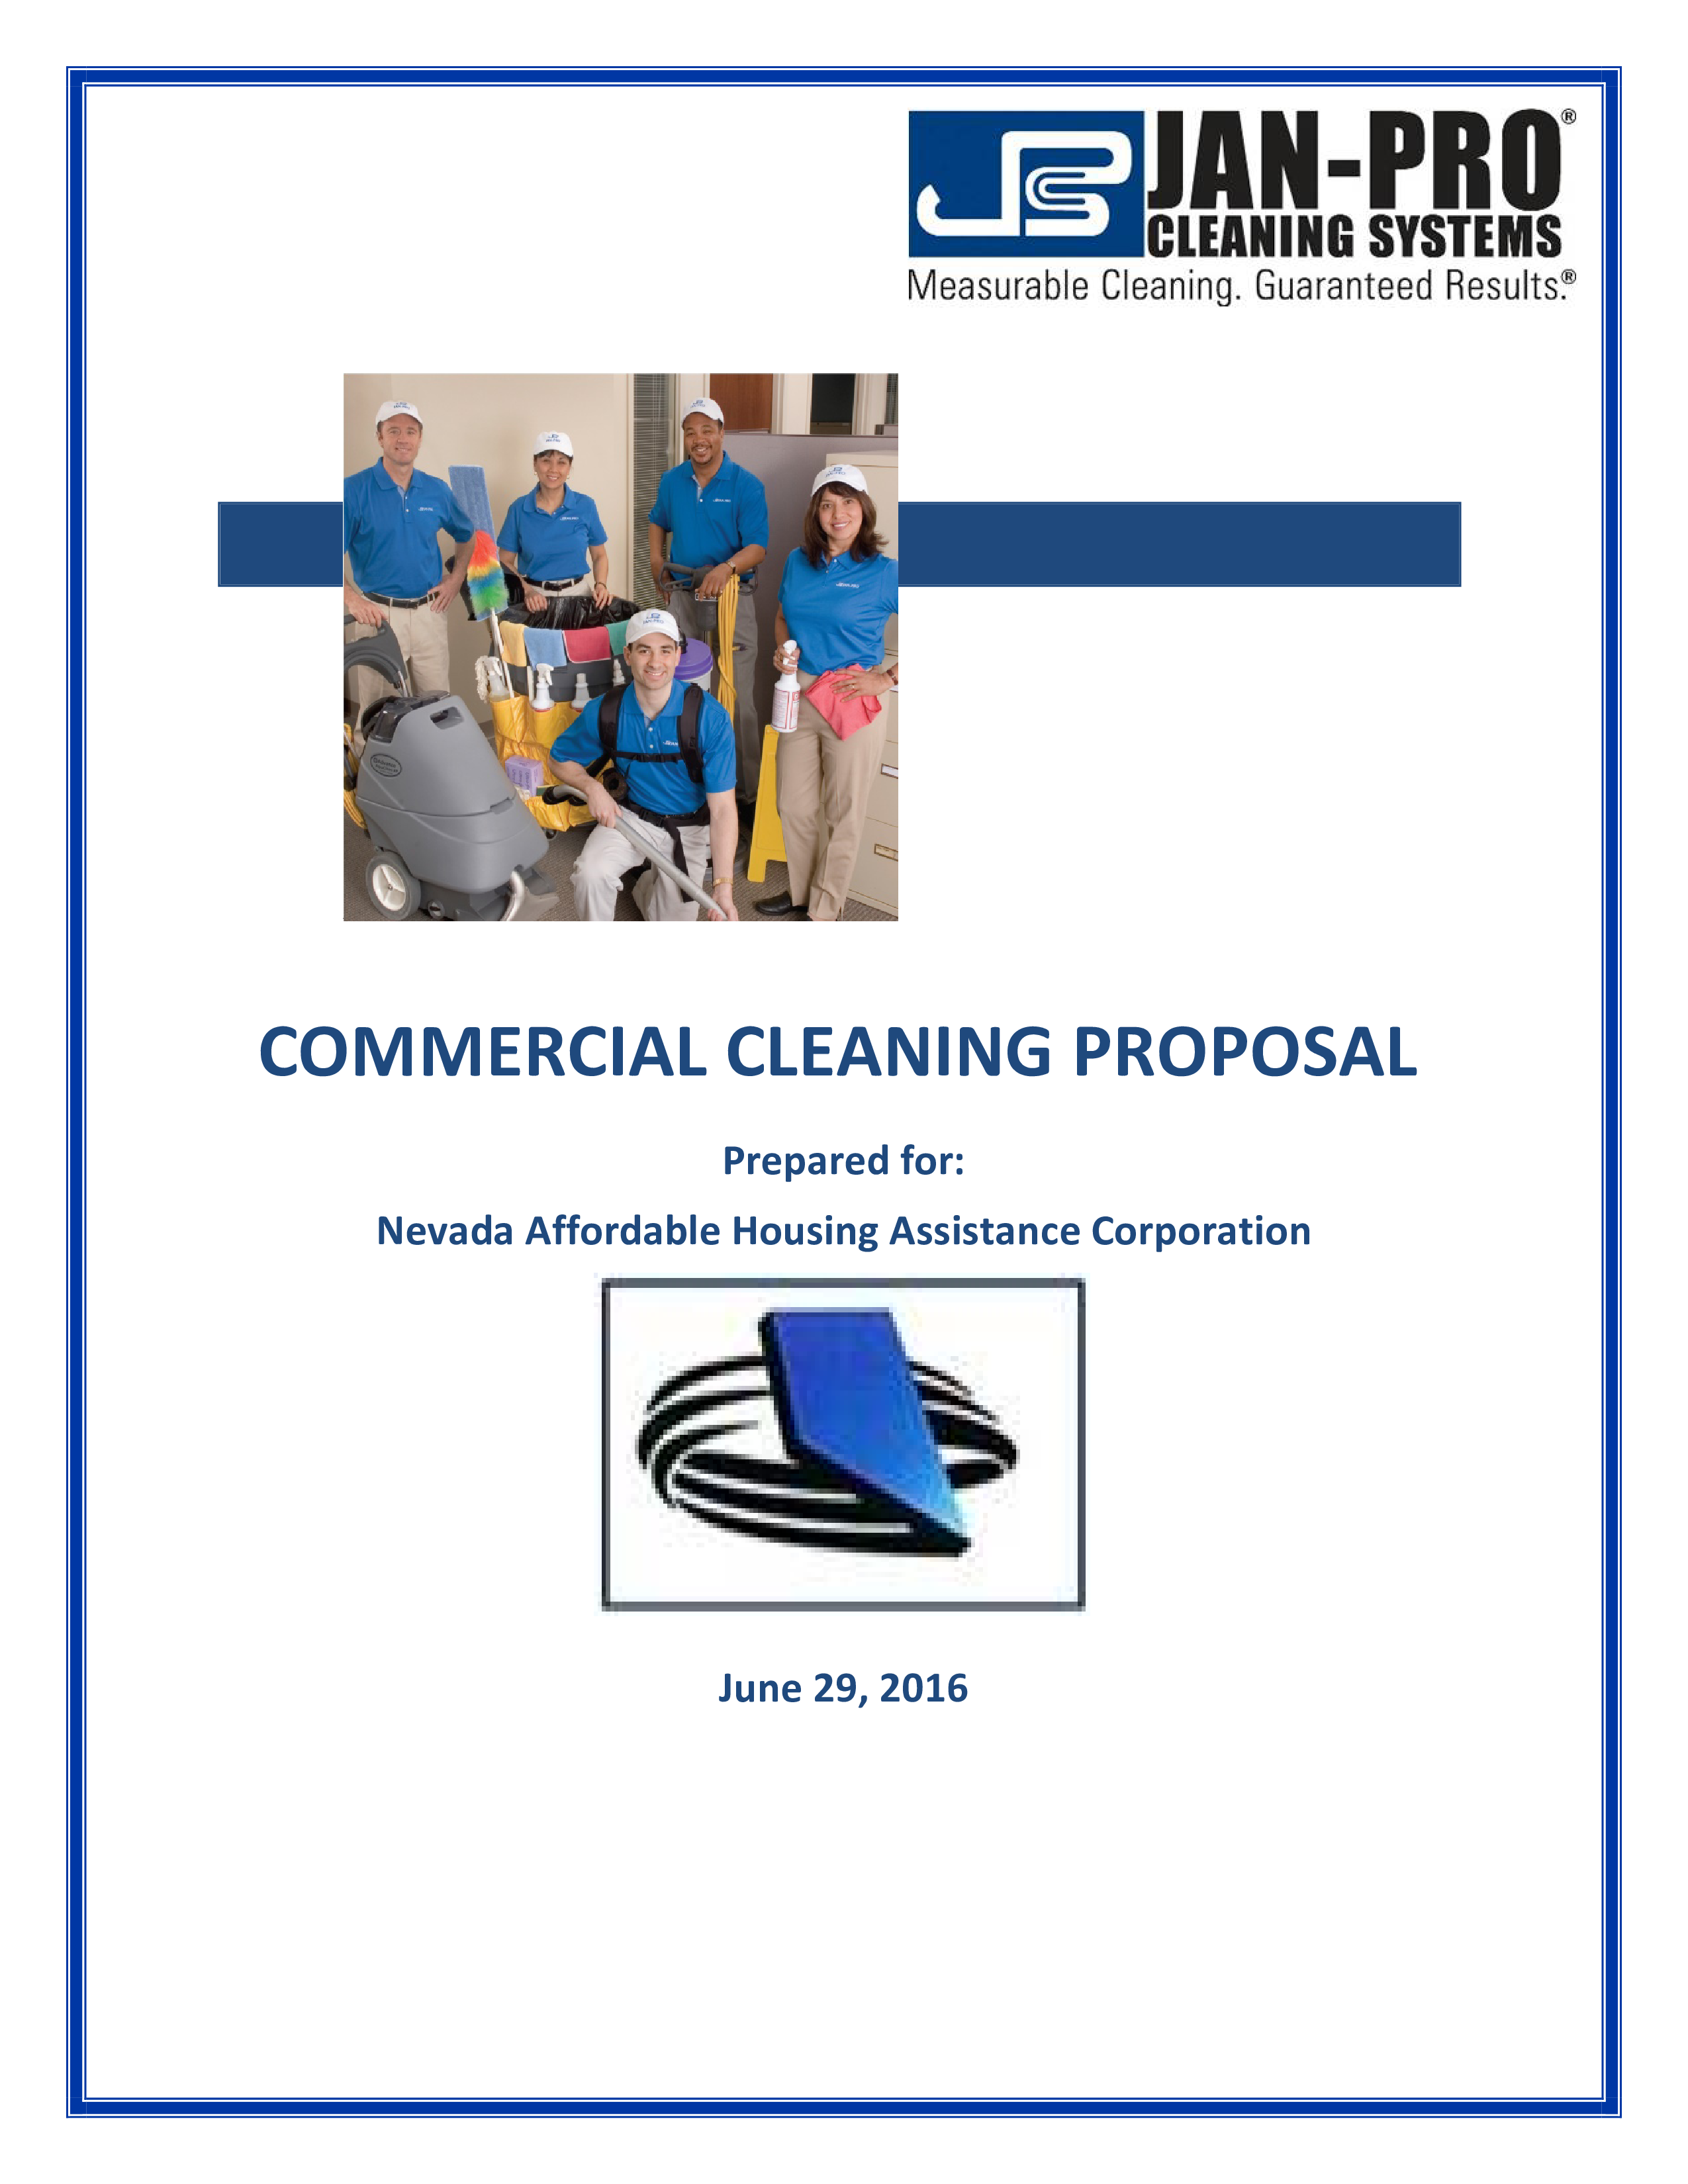 commercial cleaning service proposal plantilla imagen principal